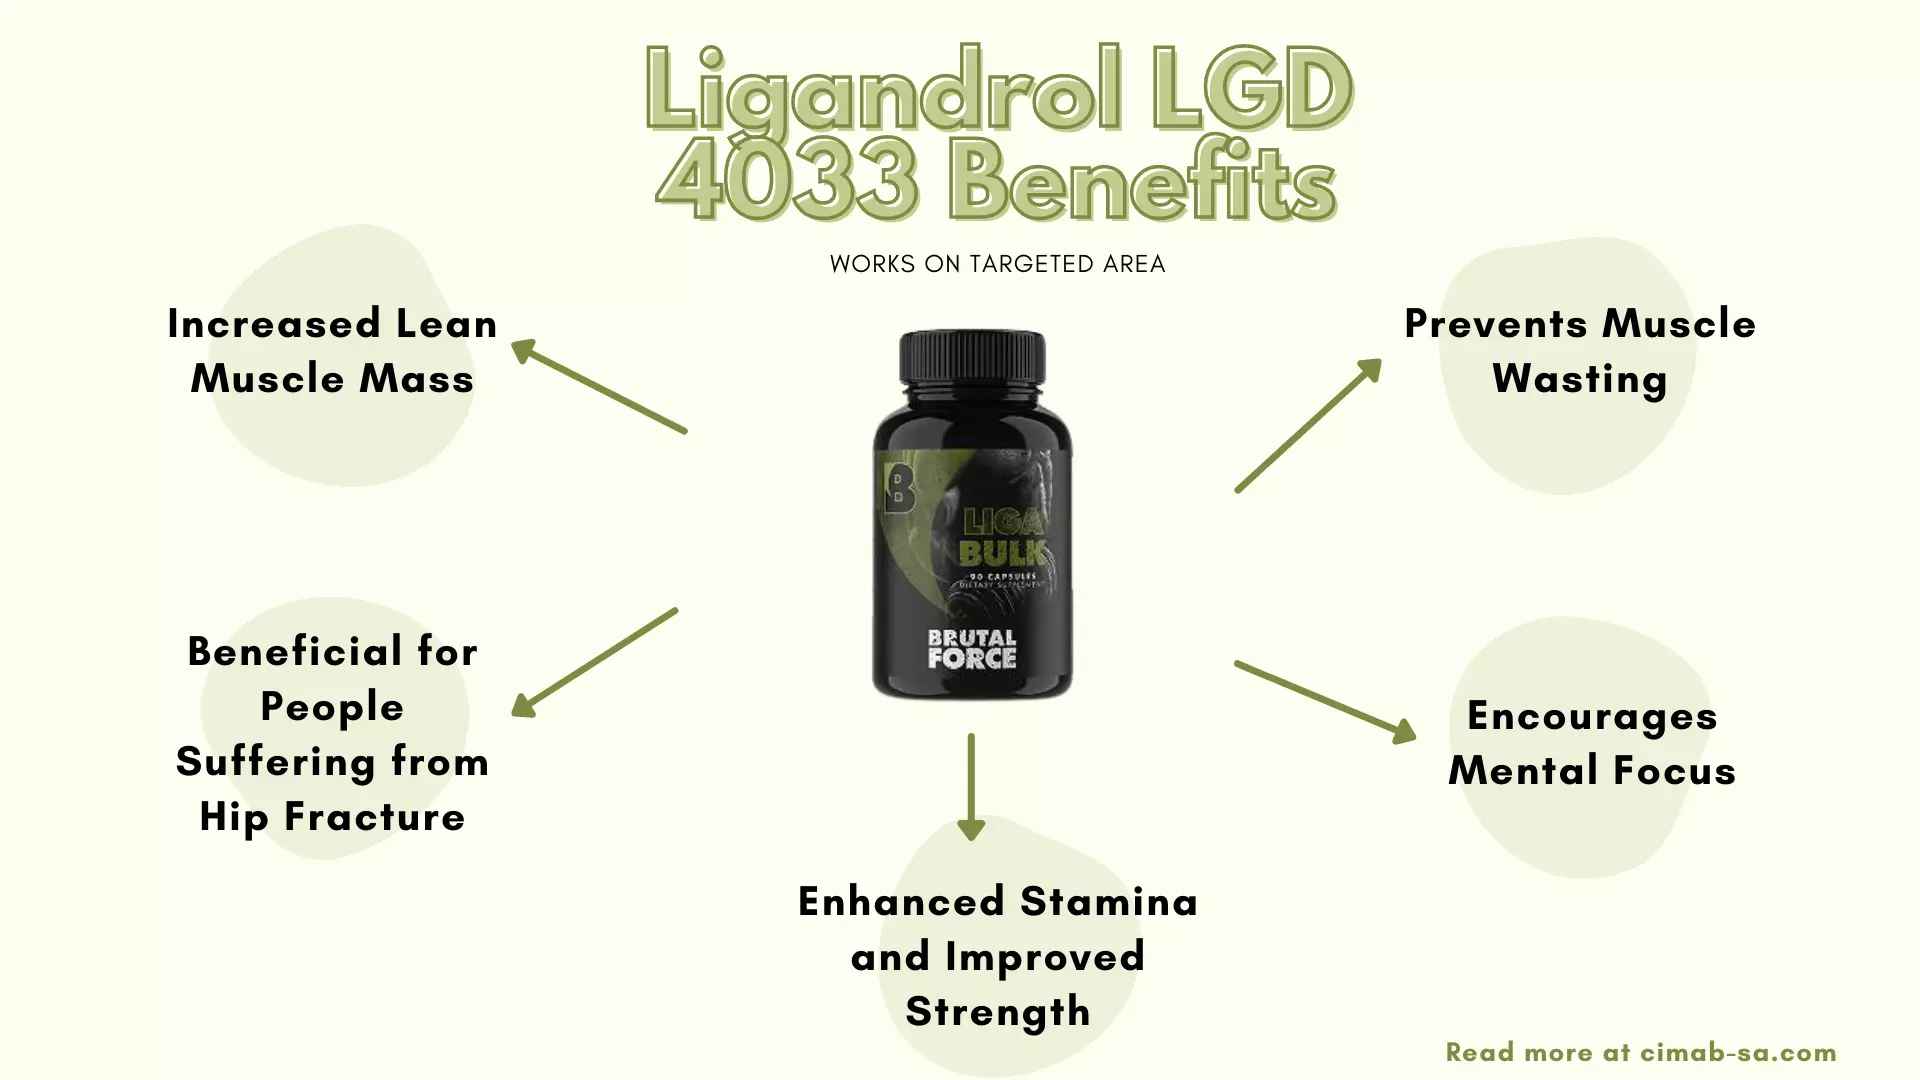 LGD 4033 Ligandrol Review